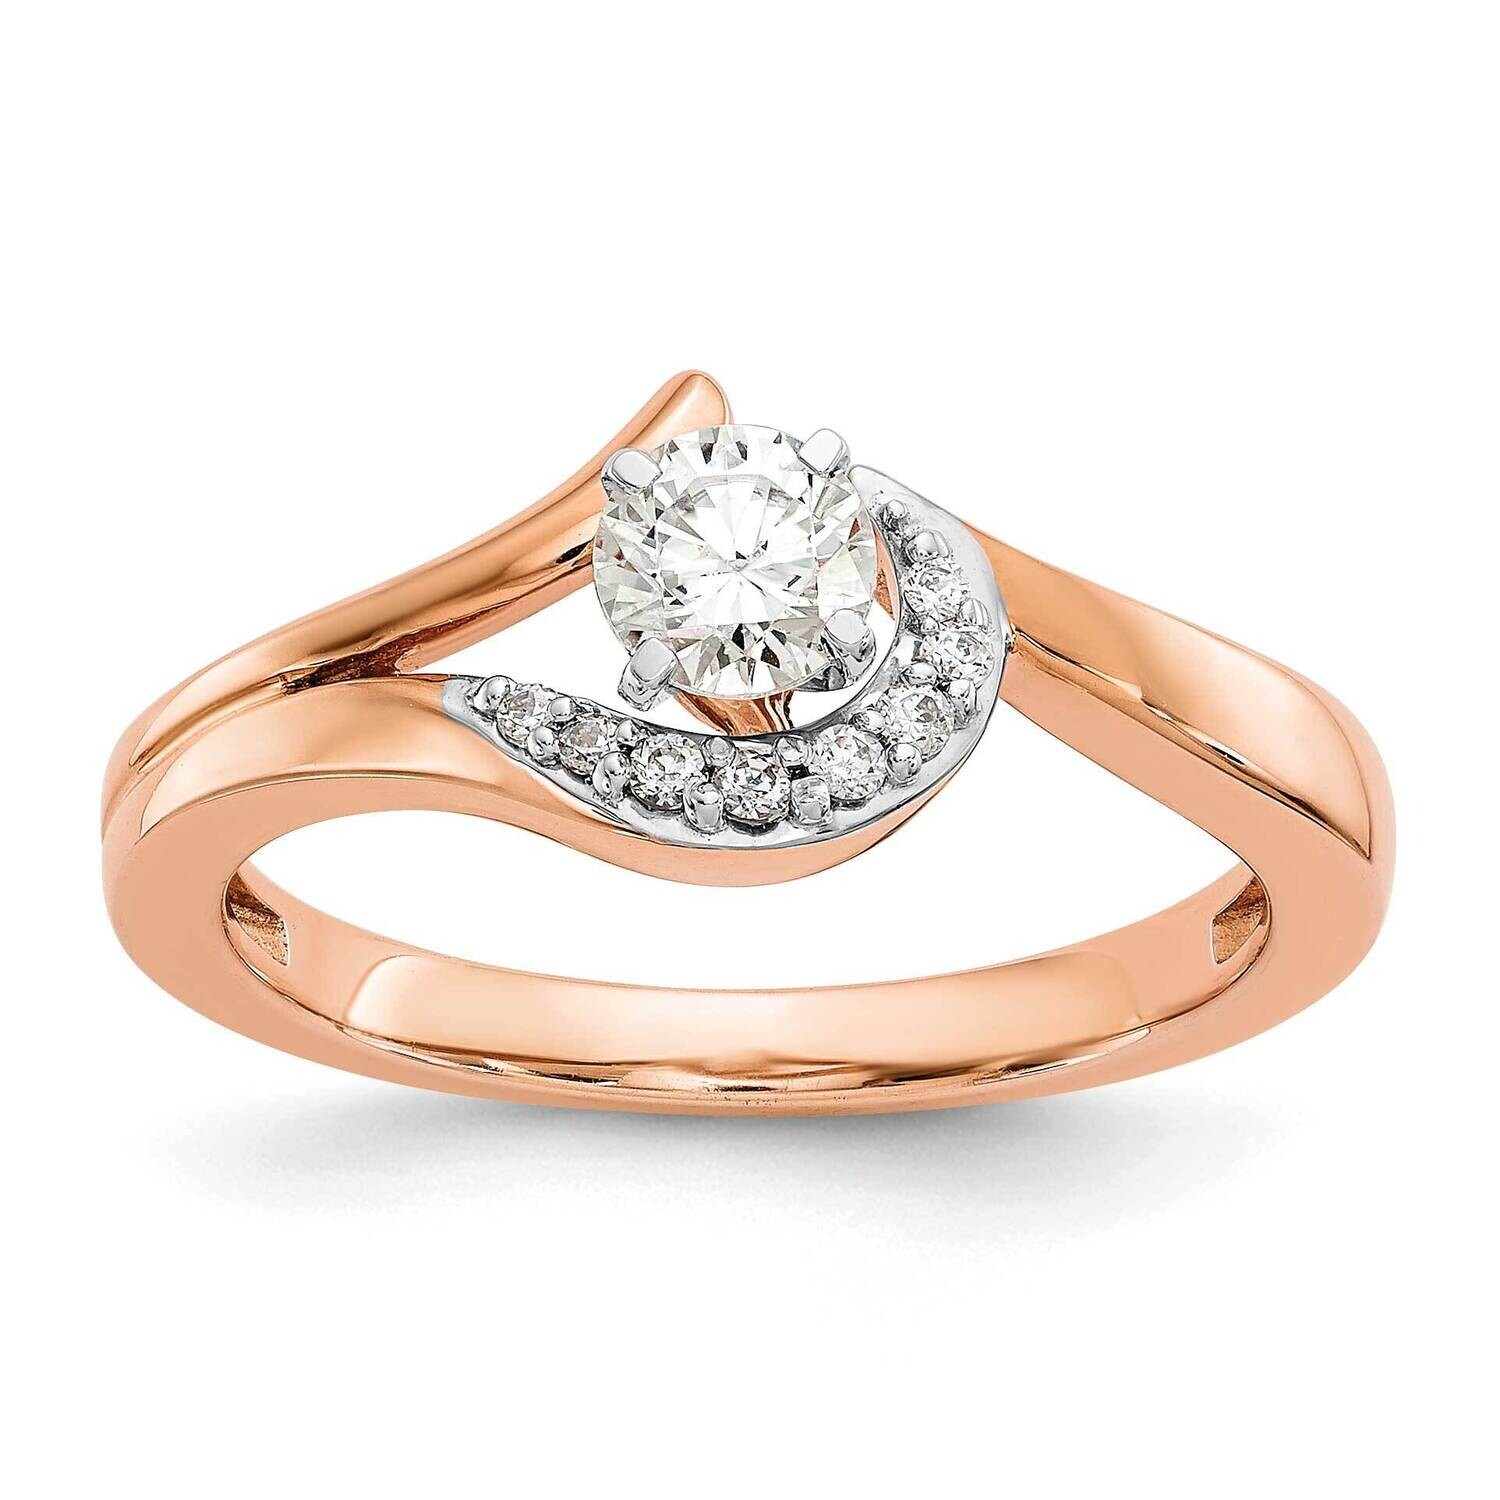 By-Pass Peg Set 1/20 Carat Diamond Semi-Mount Engagement Ring 14k Rose Gold RM2504E-006-RAA